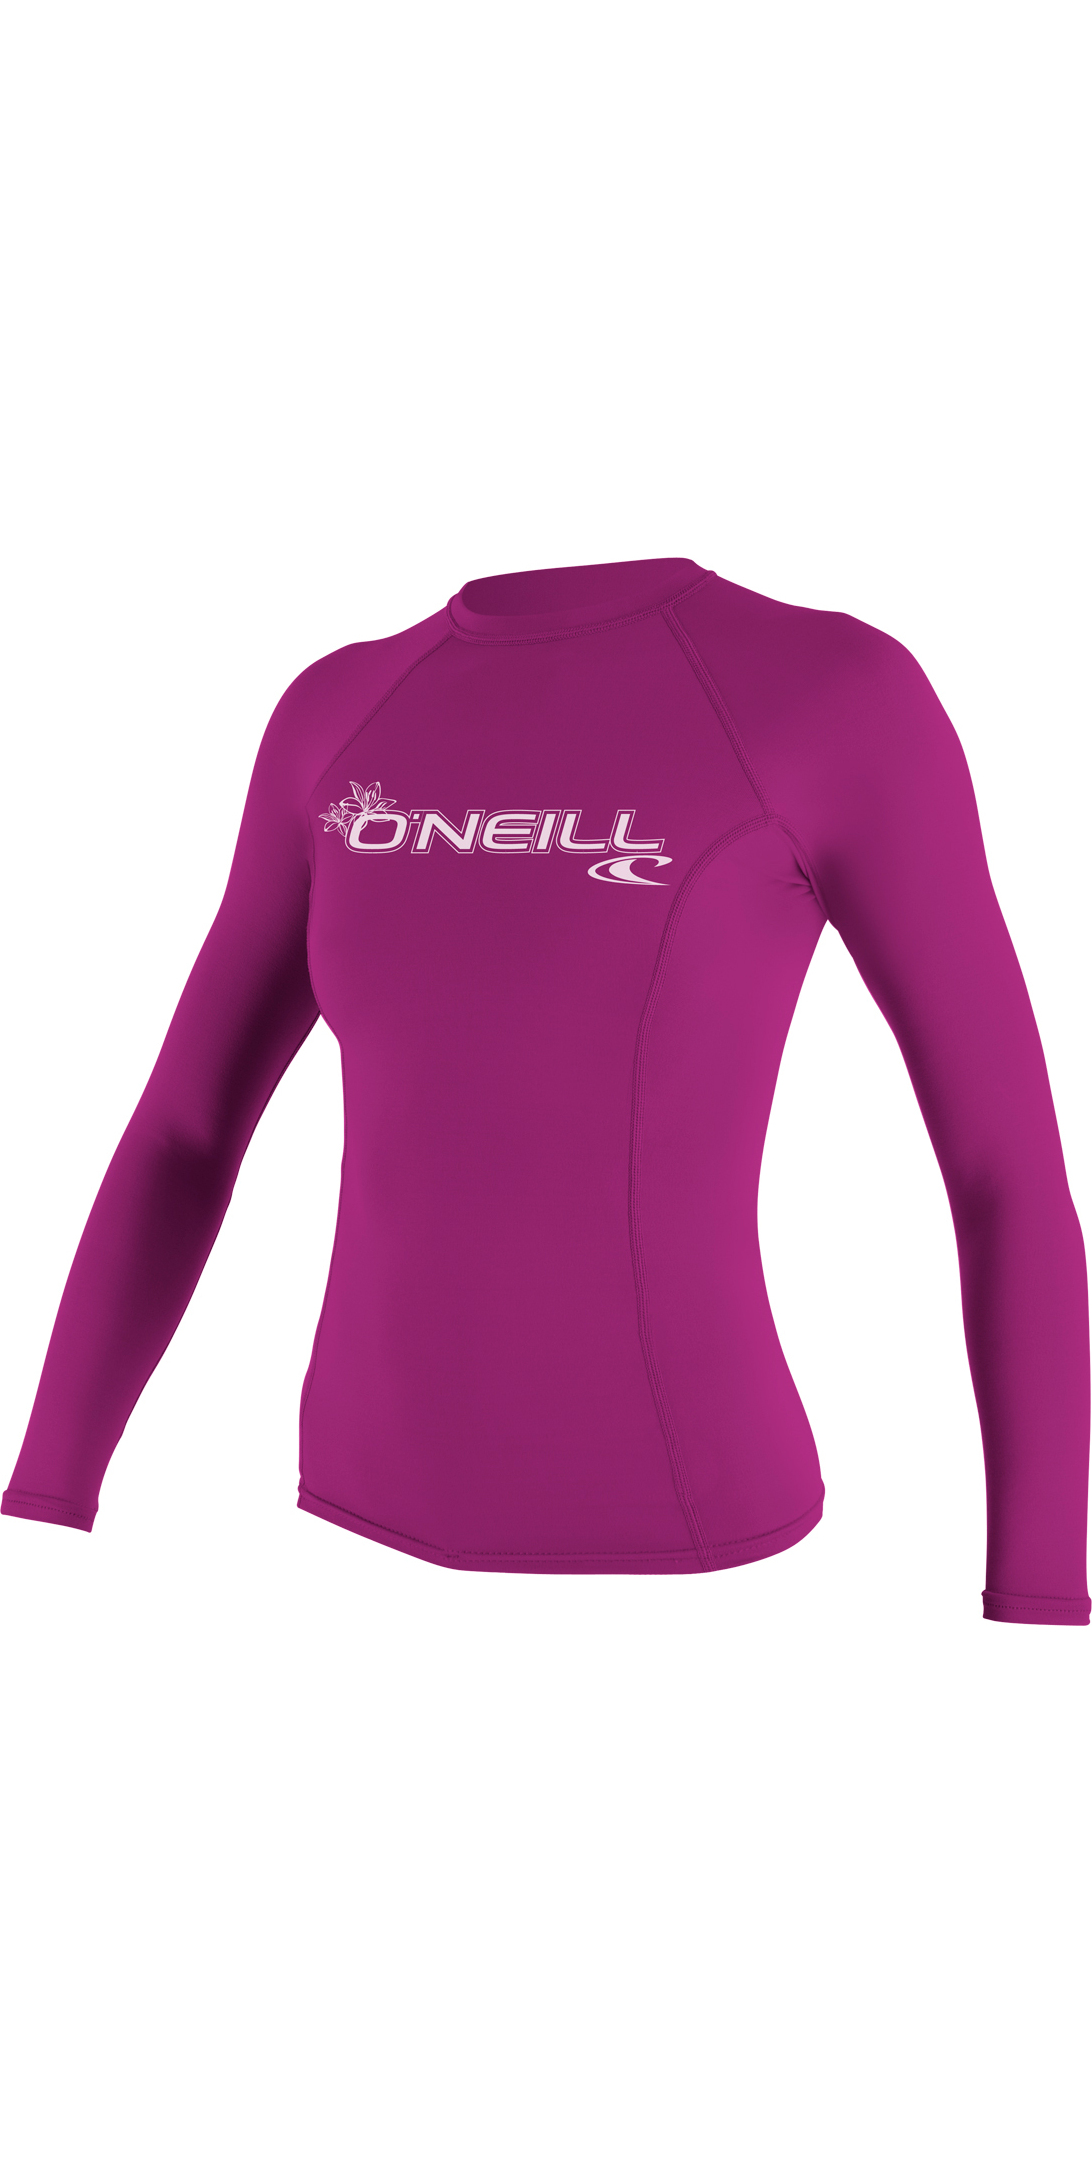 O'Neill Women's Basic Skins Long Sleeve Crew Rashguard at